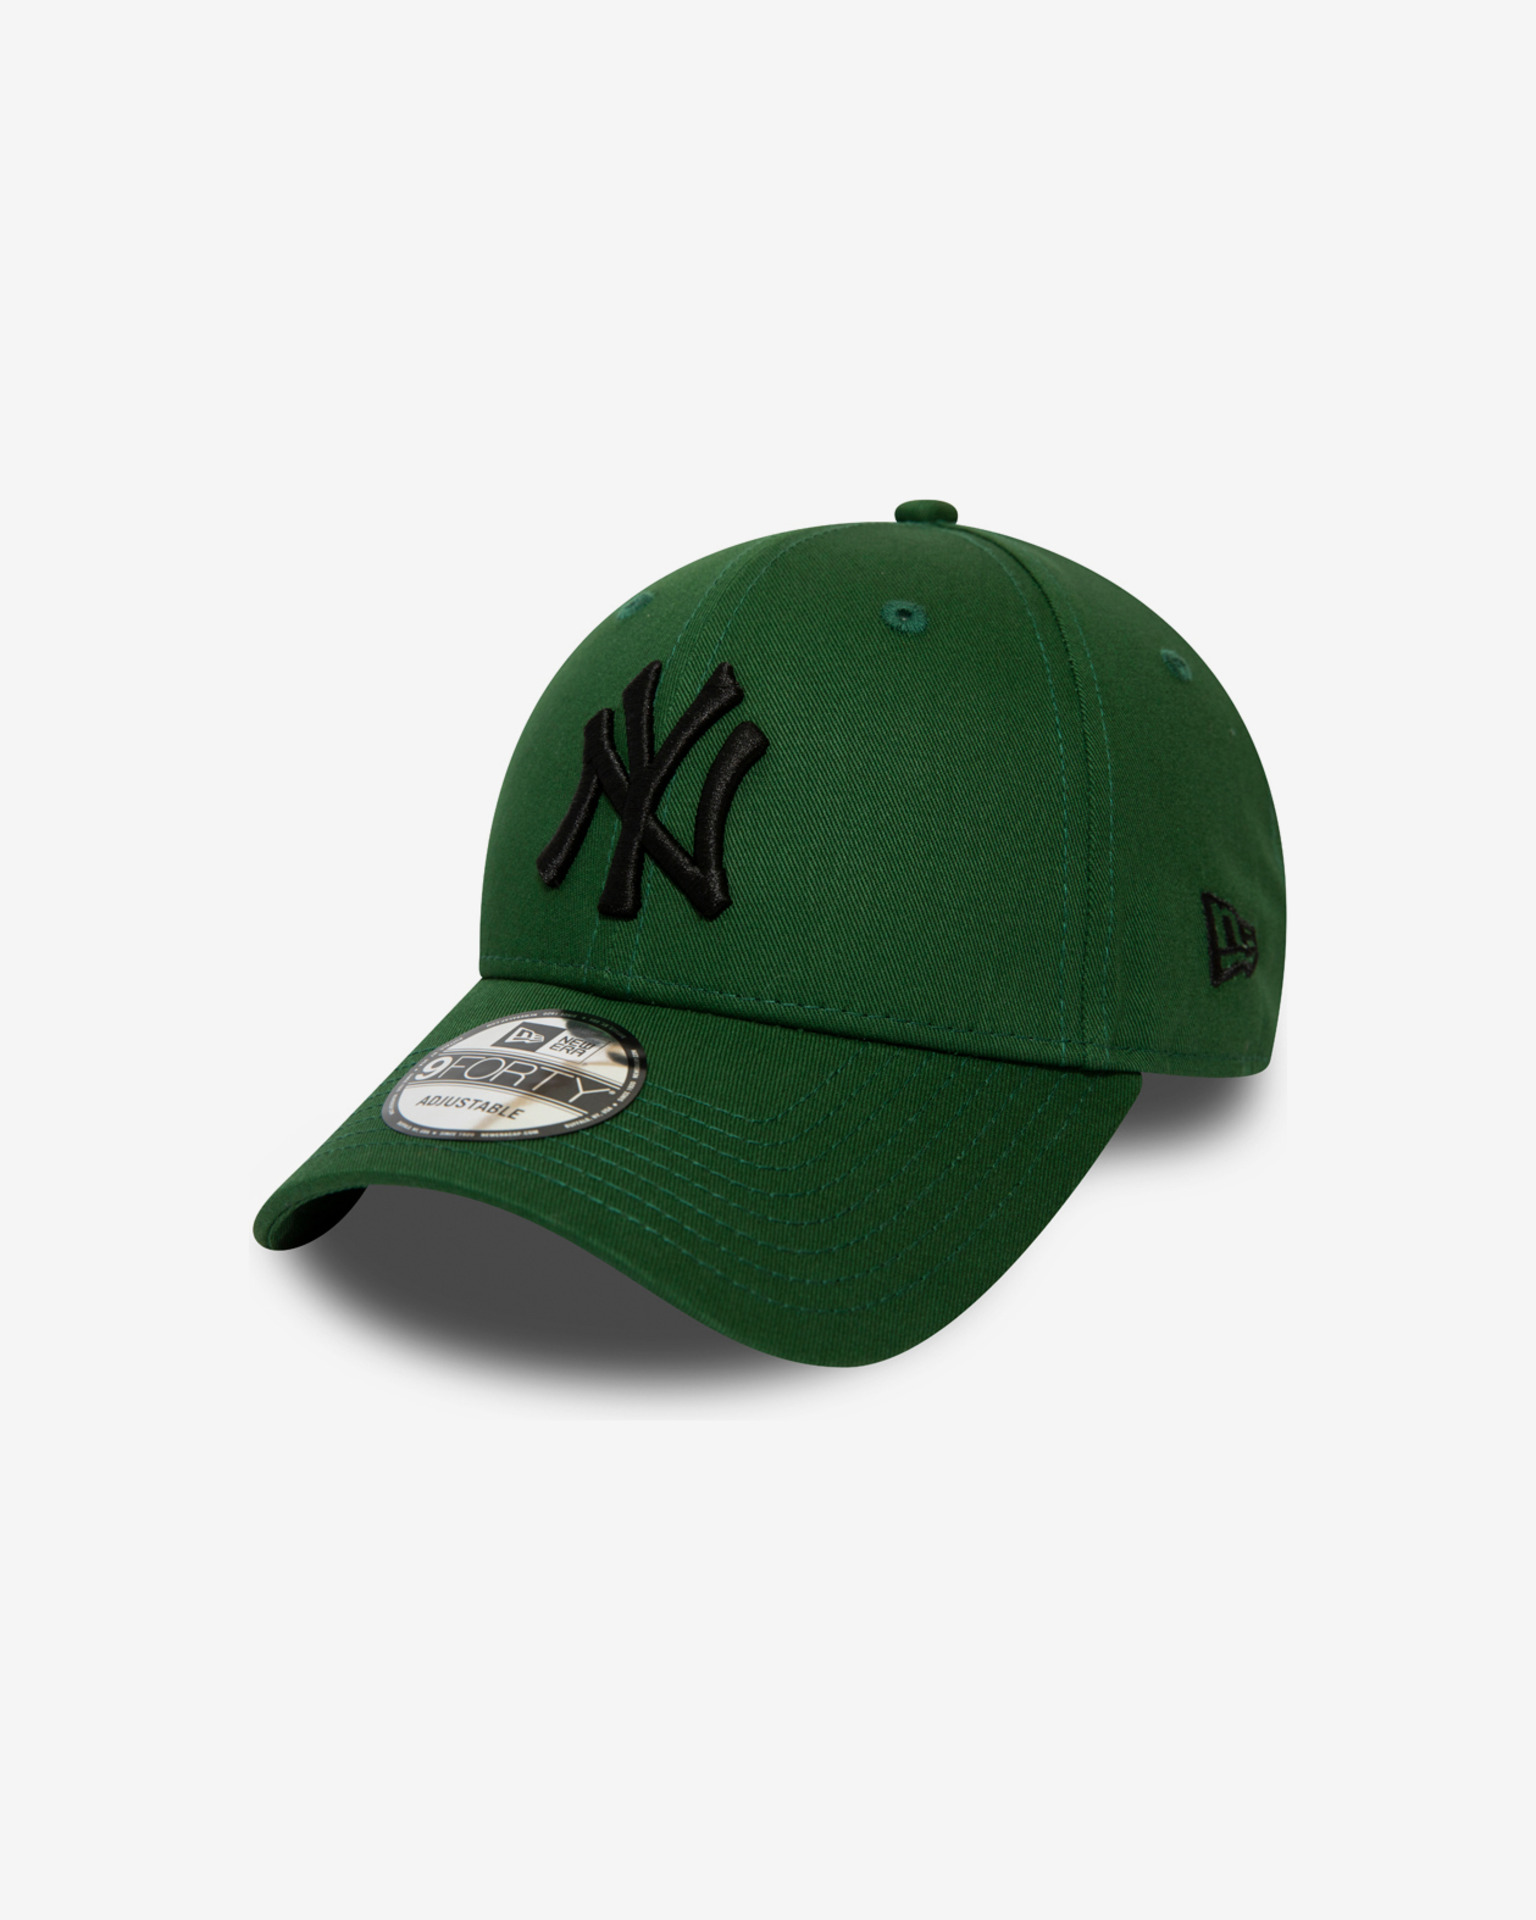 New Era - New York Yankees Cap